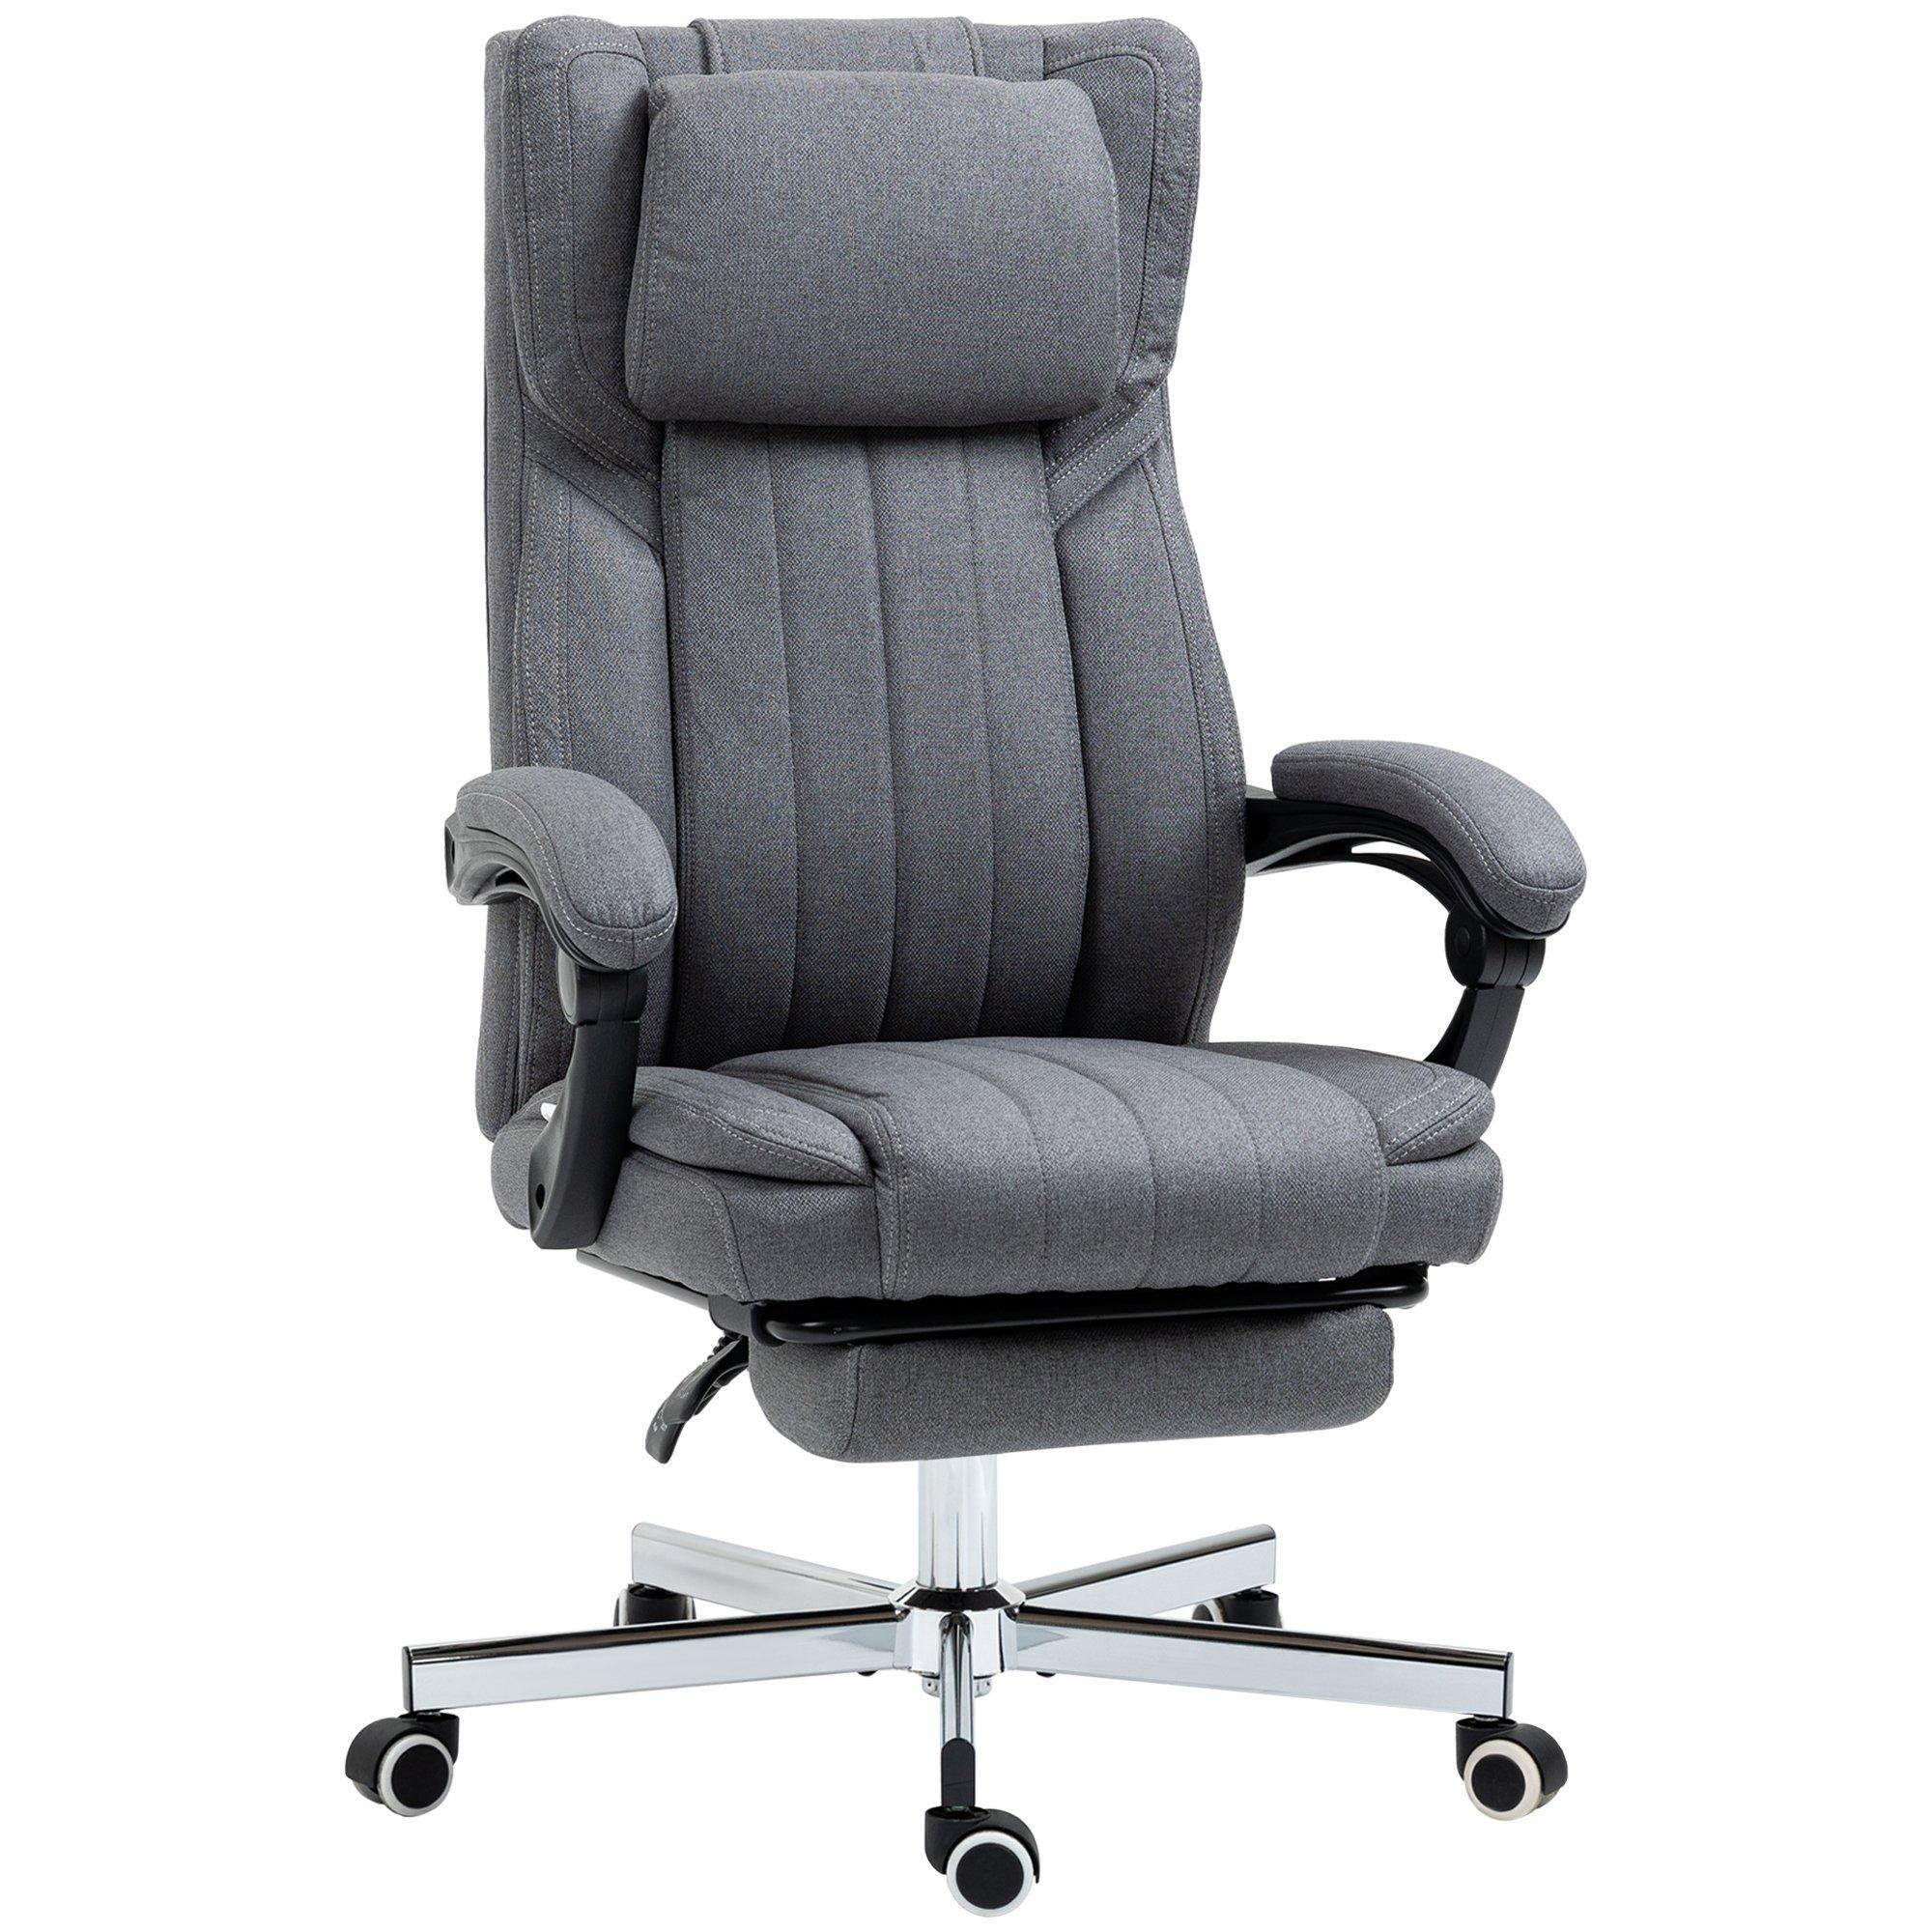 High Back Computer Desk Chair with Adjustable Headrest Footrest - image 1